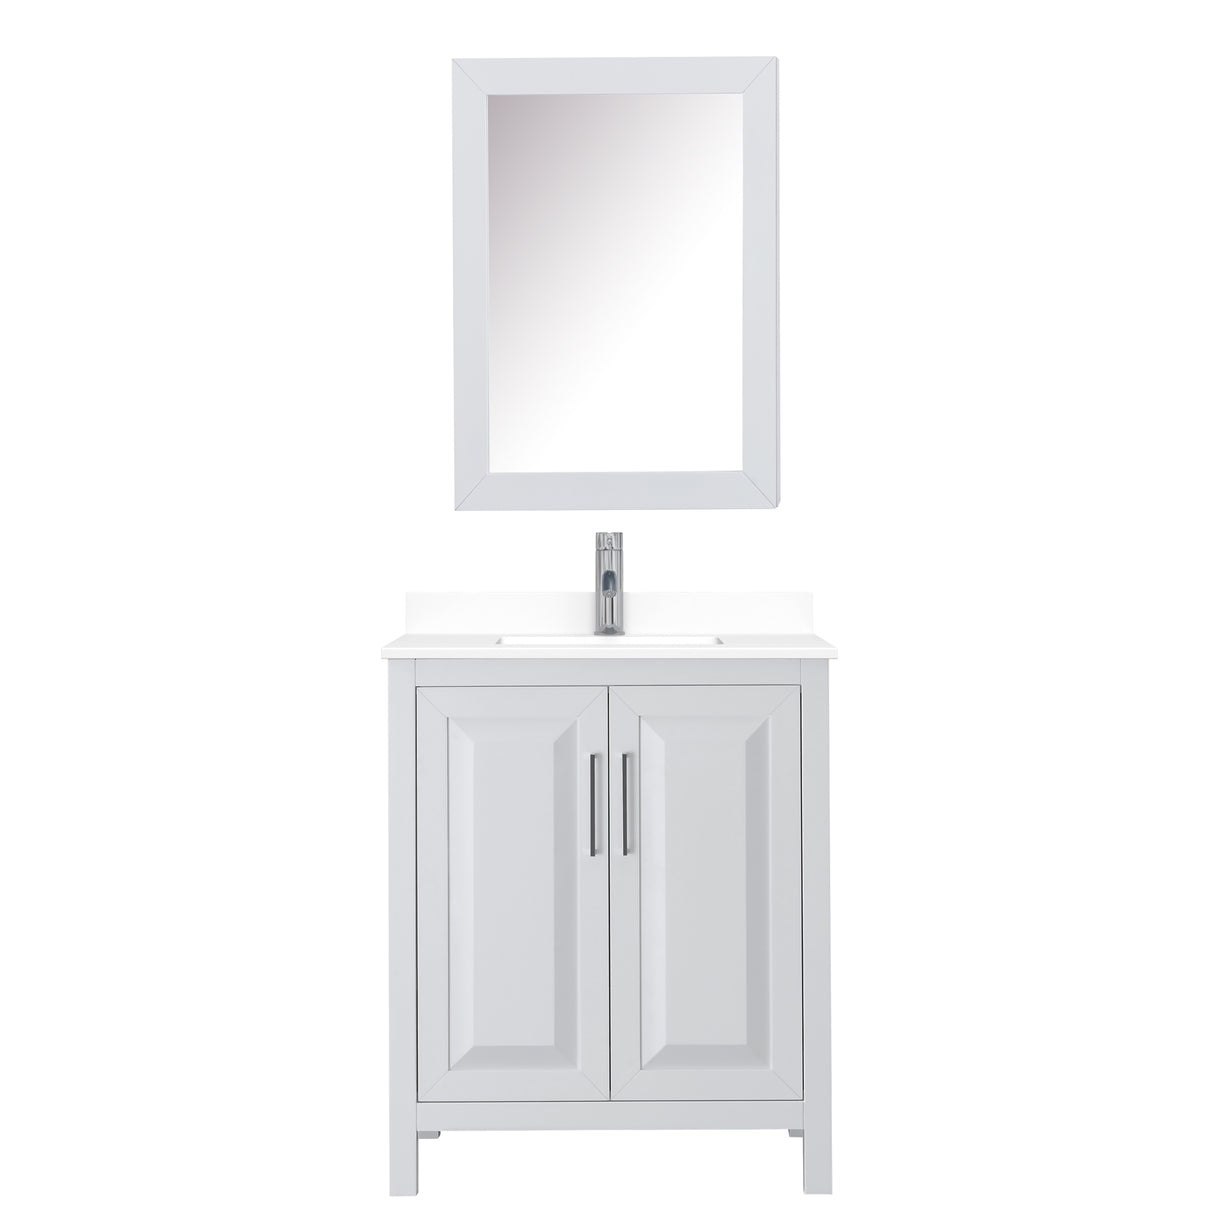 Daria 30 Inch Single Bathroom Vanity in White White Cultured Marble Countertop Undermount Square Sink Medicine Cabinet